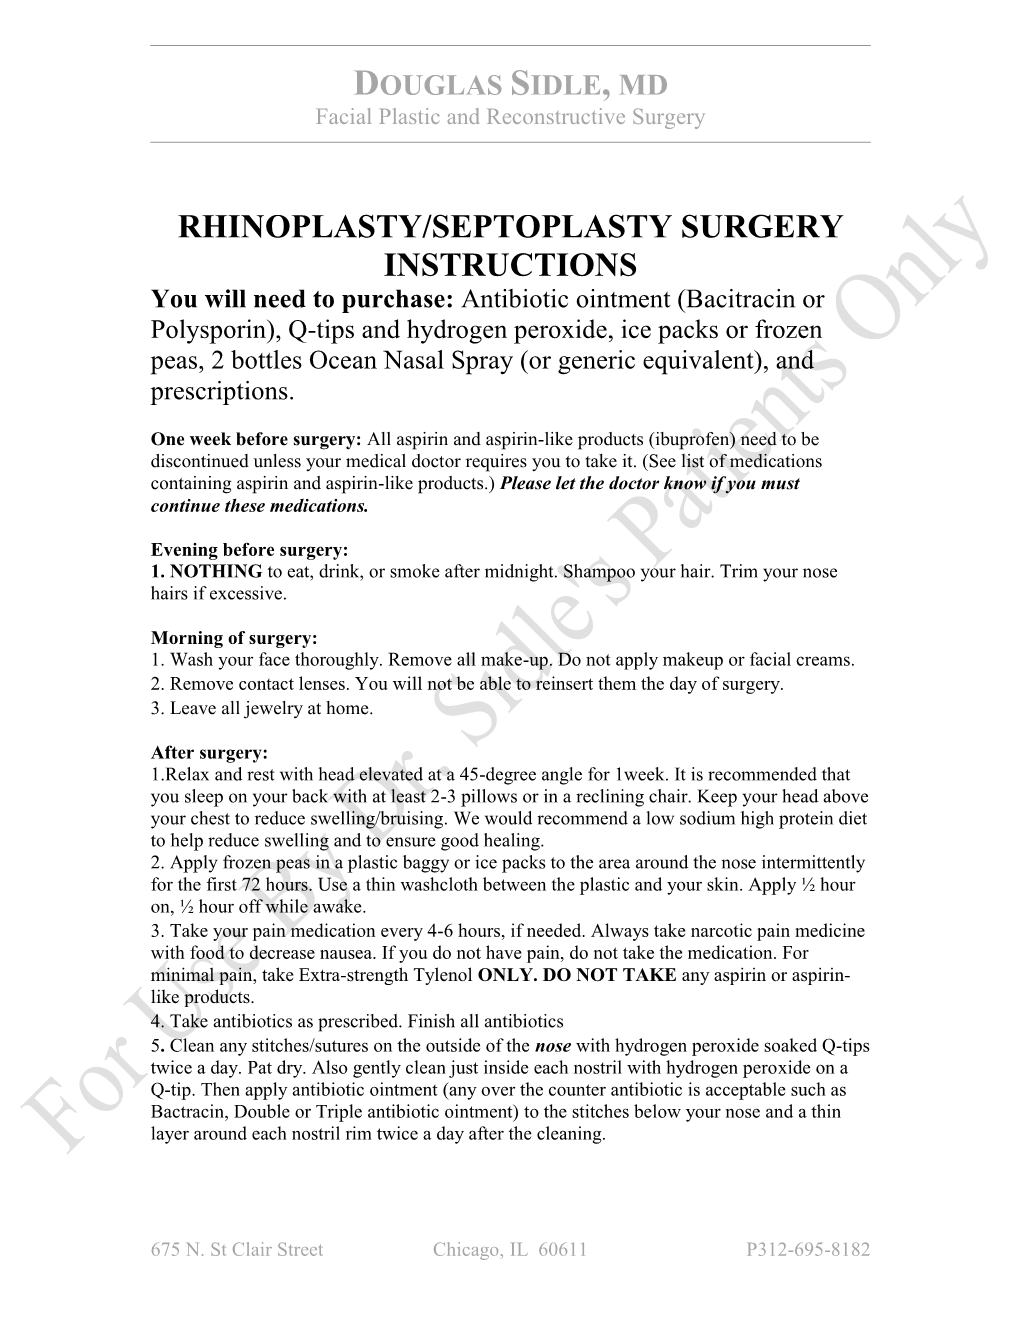 Rhinoplasty/Septoplasty Surgery Instructions